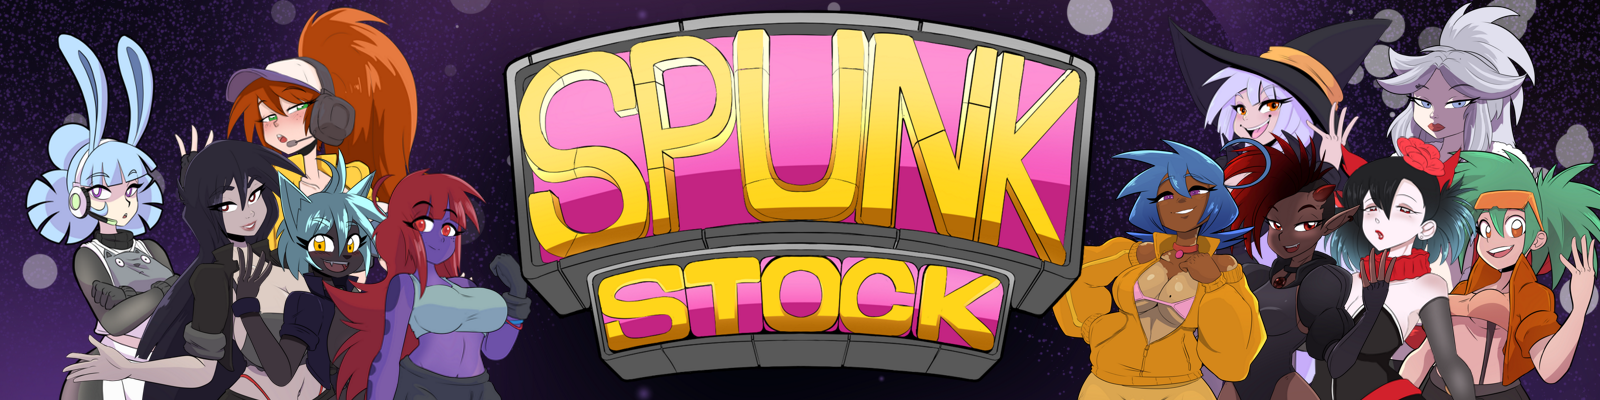 SpunkStock: Music Festival